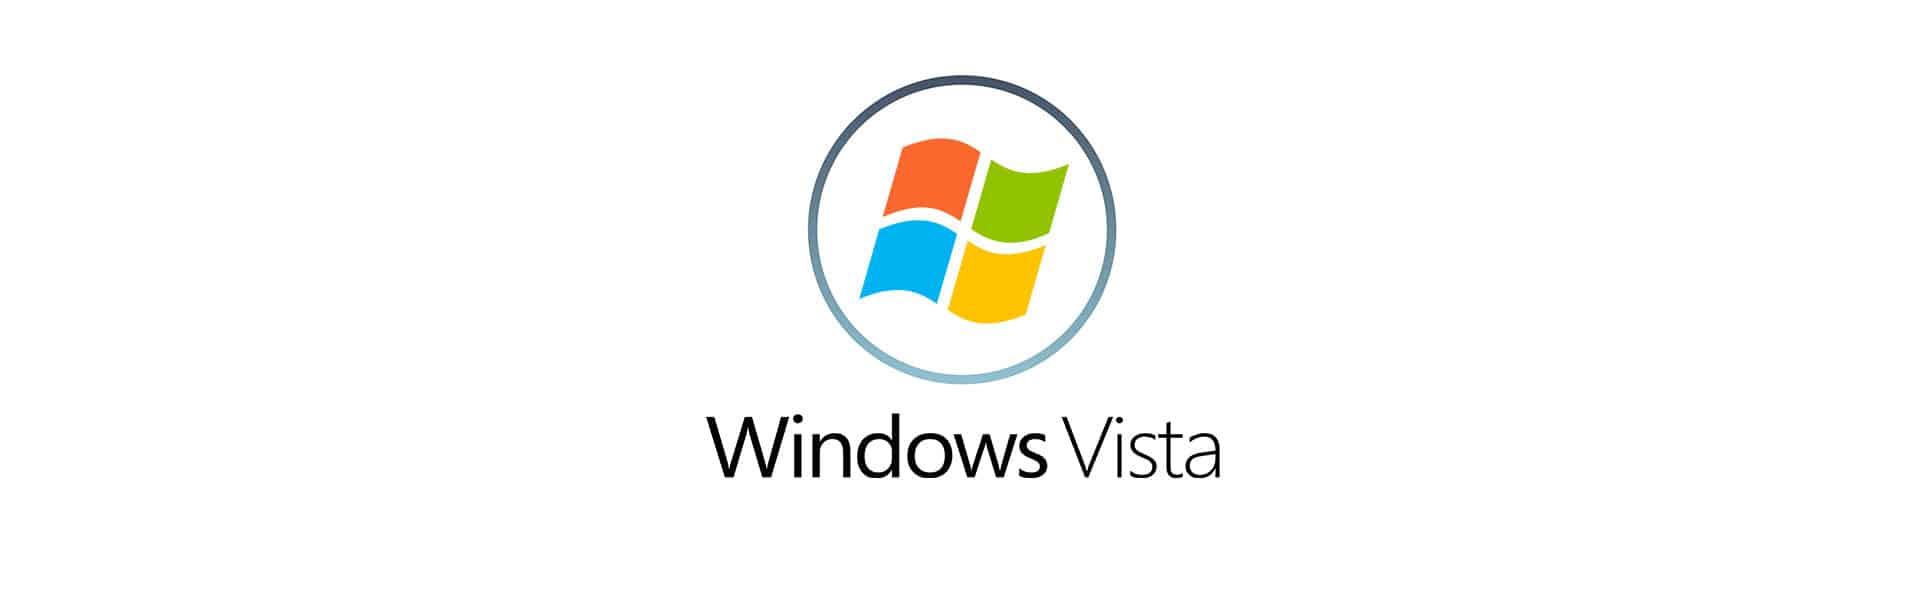 Microsoft Ending Support for Windows Vista